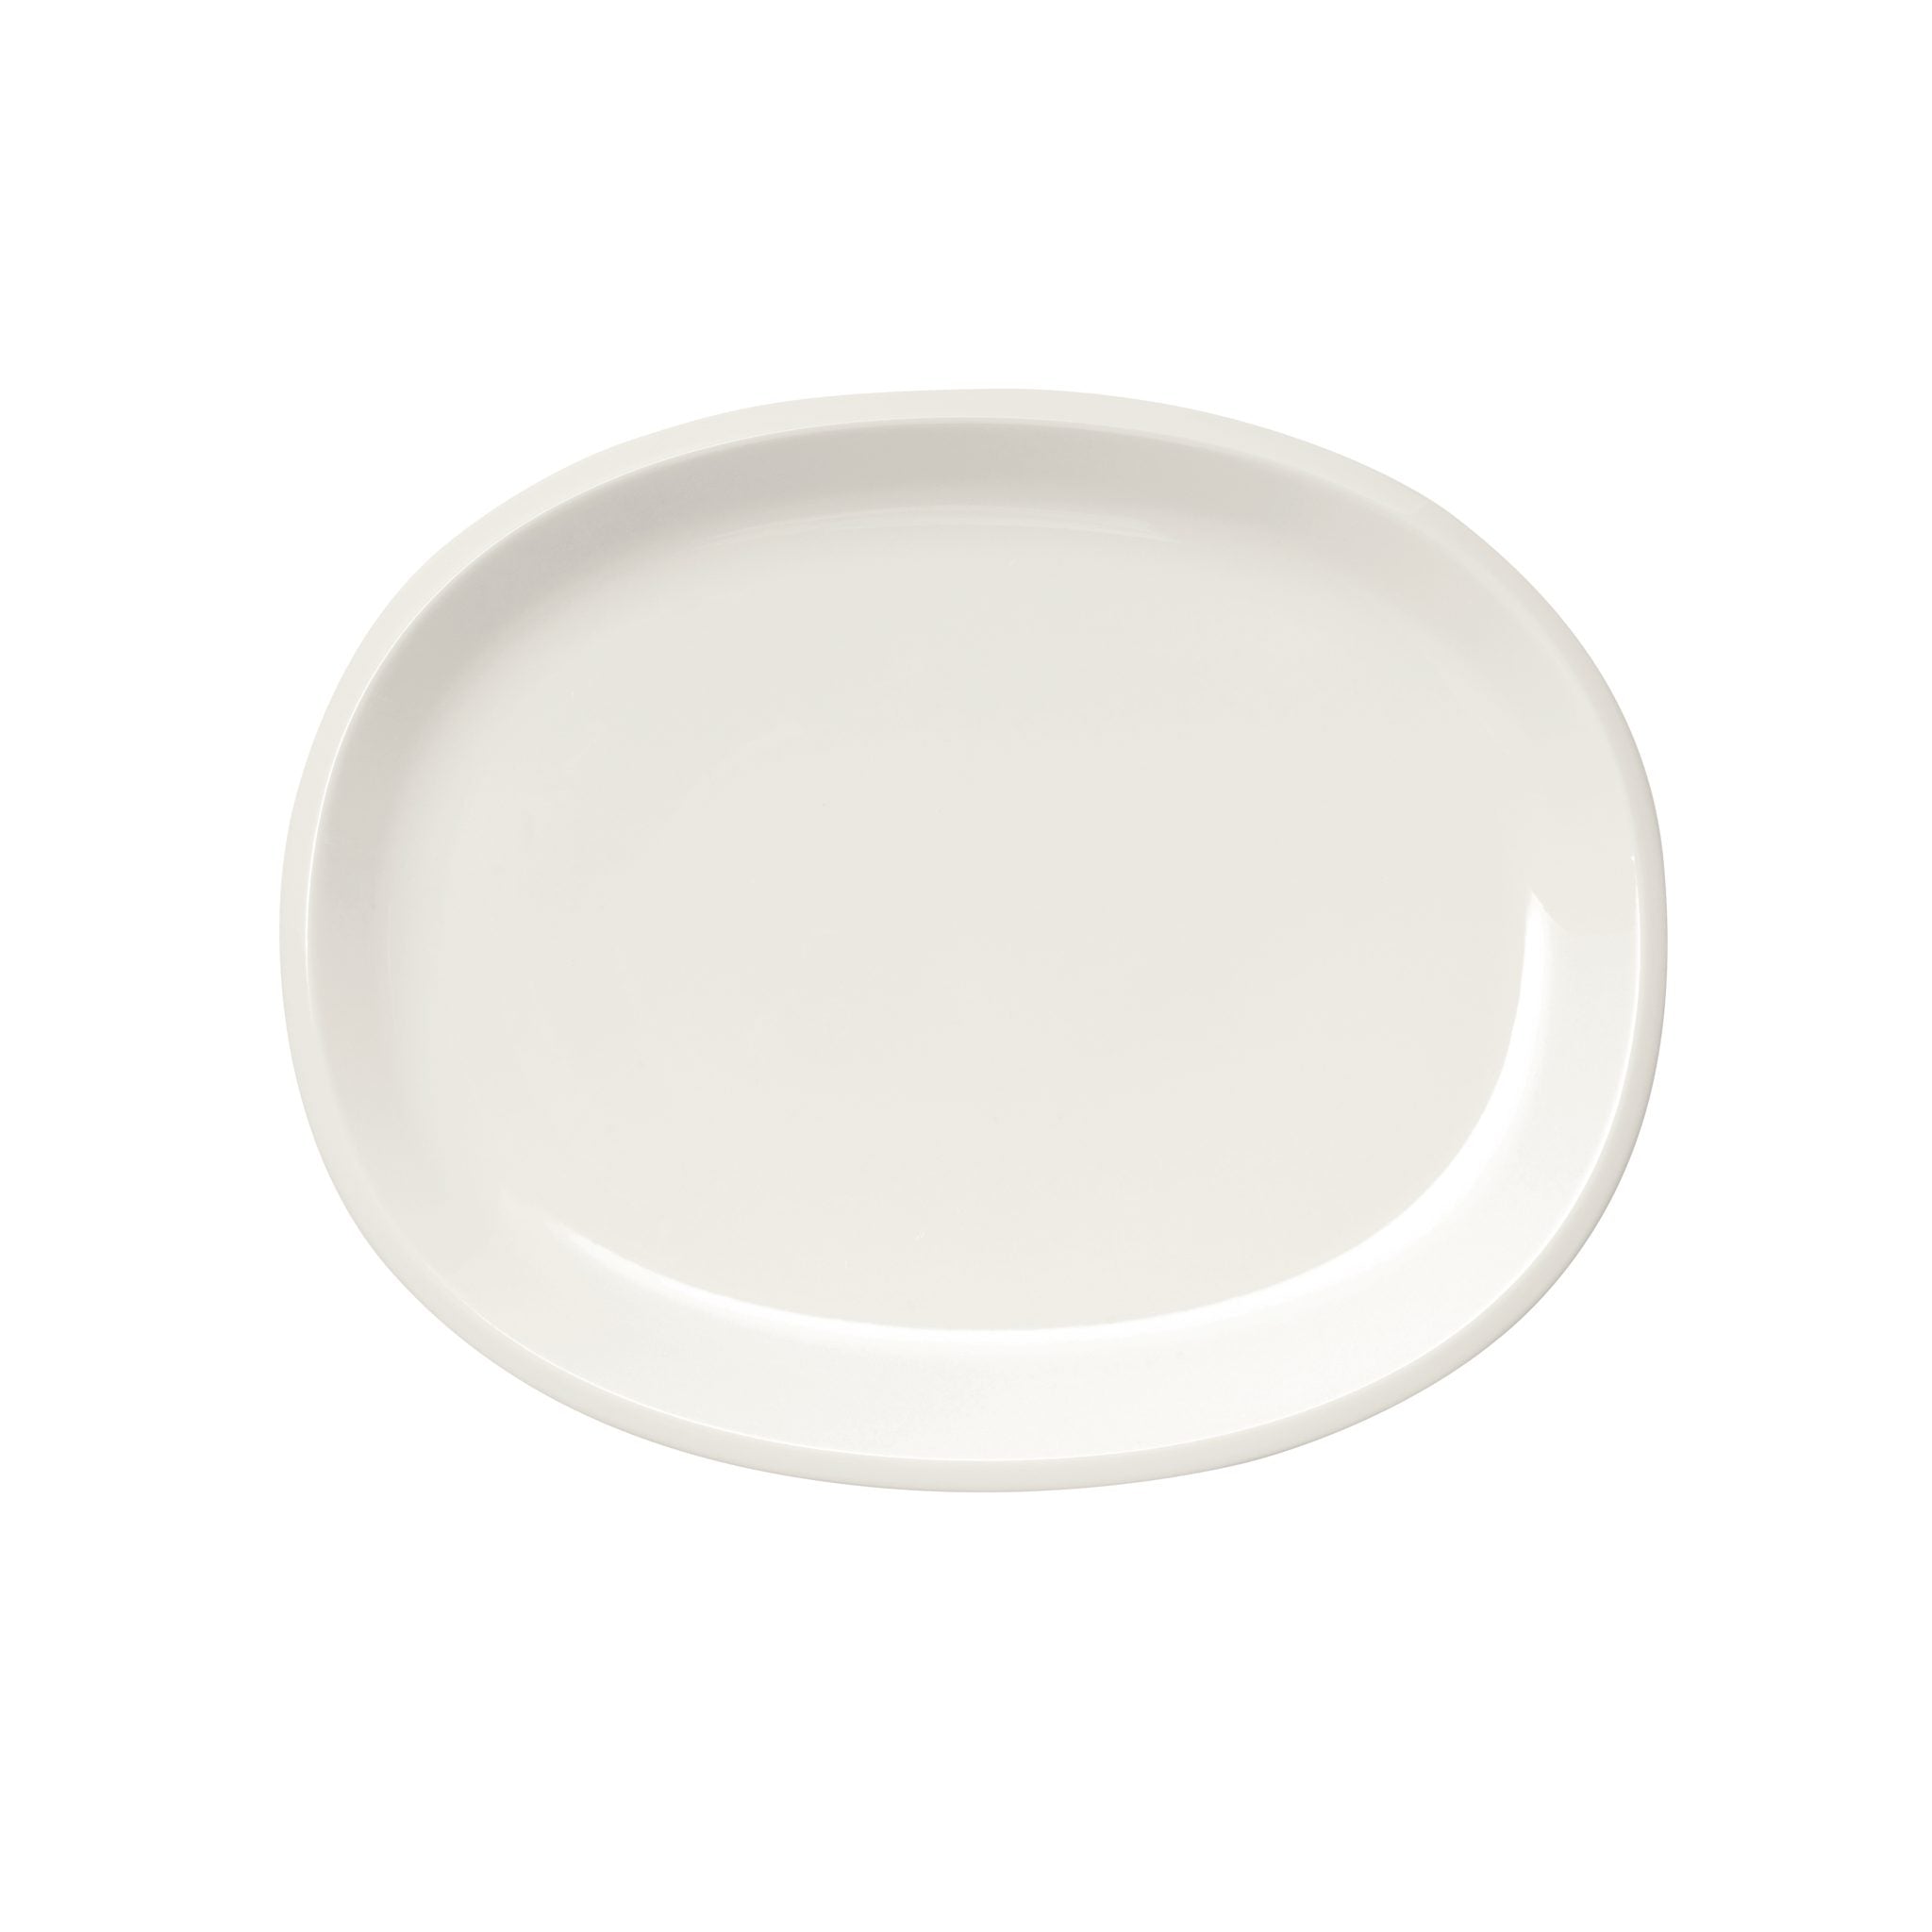 Raami Oval Serving Platter by Iittala